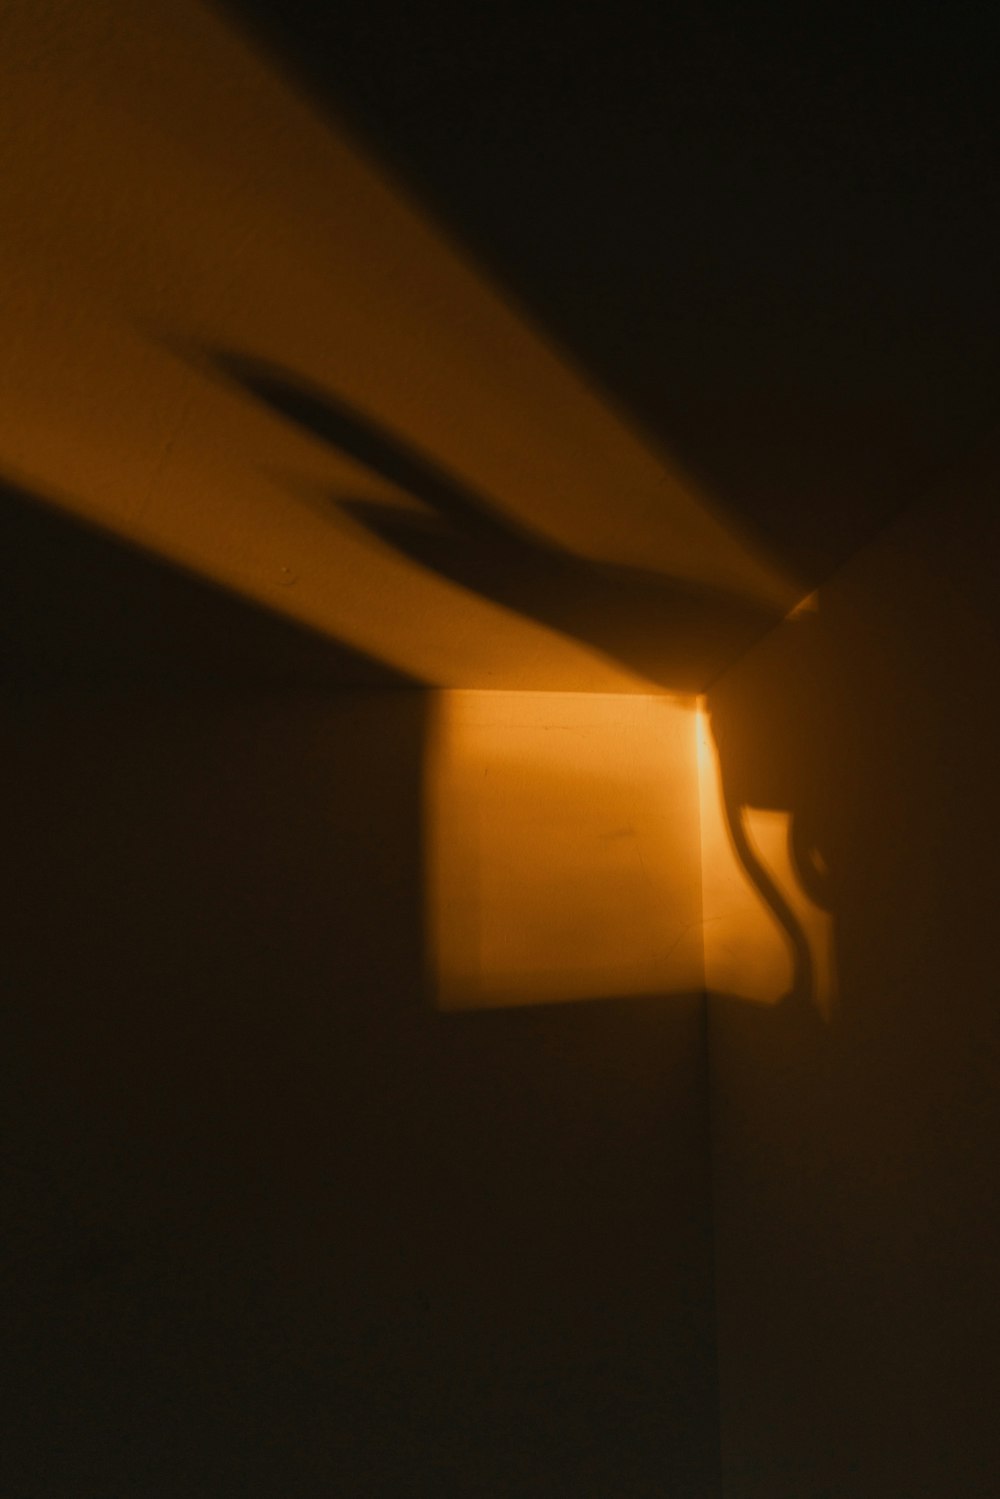 yellow light bulb turned on in dark room